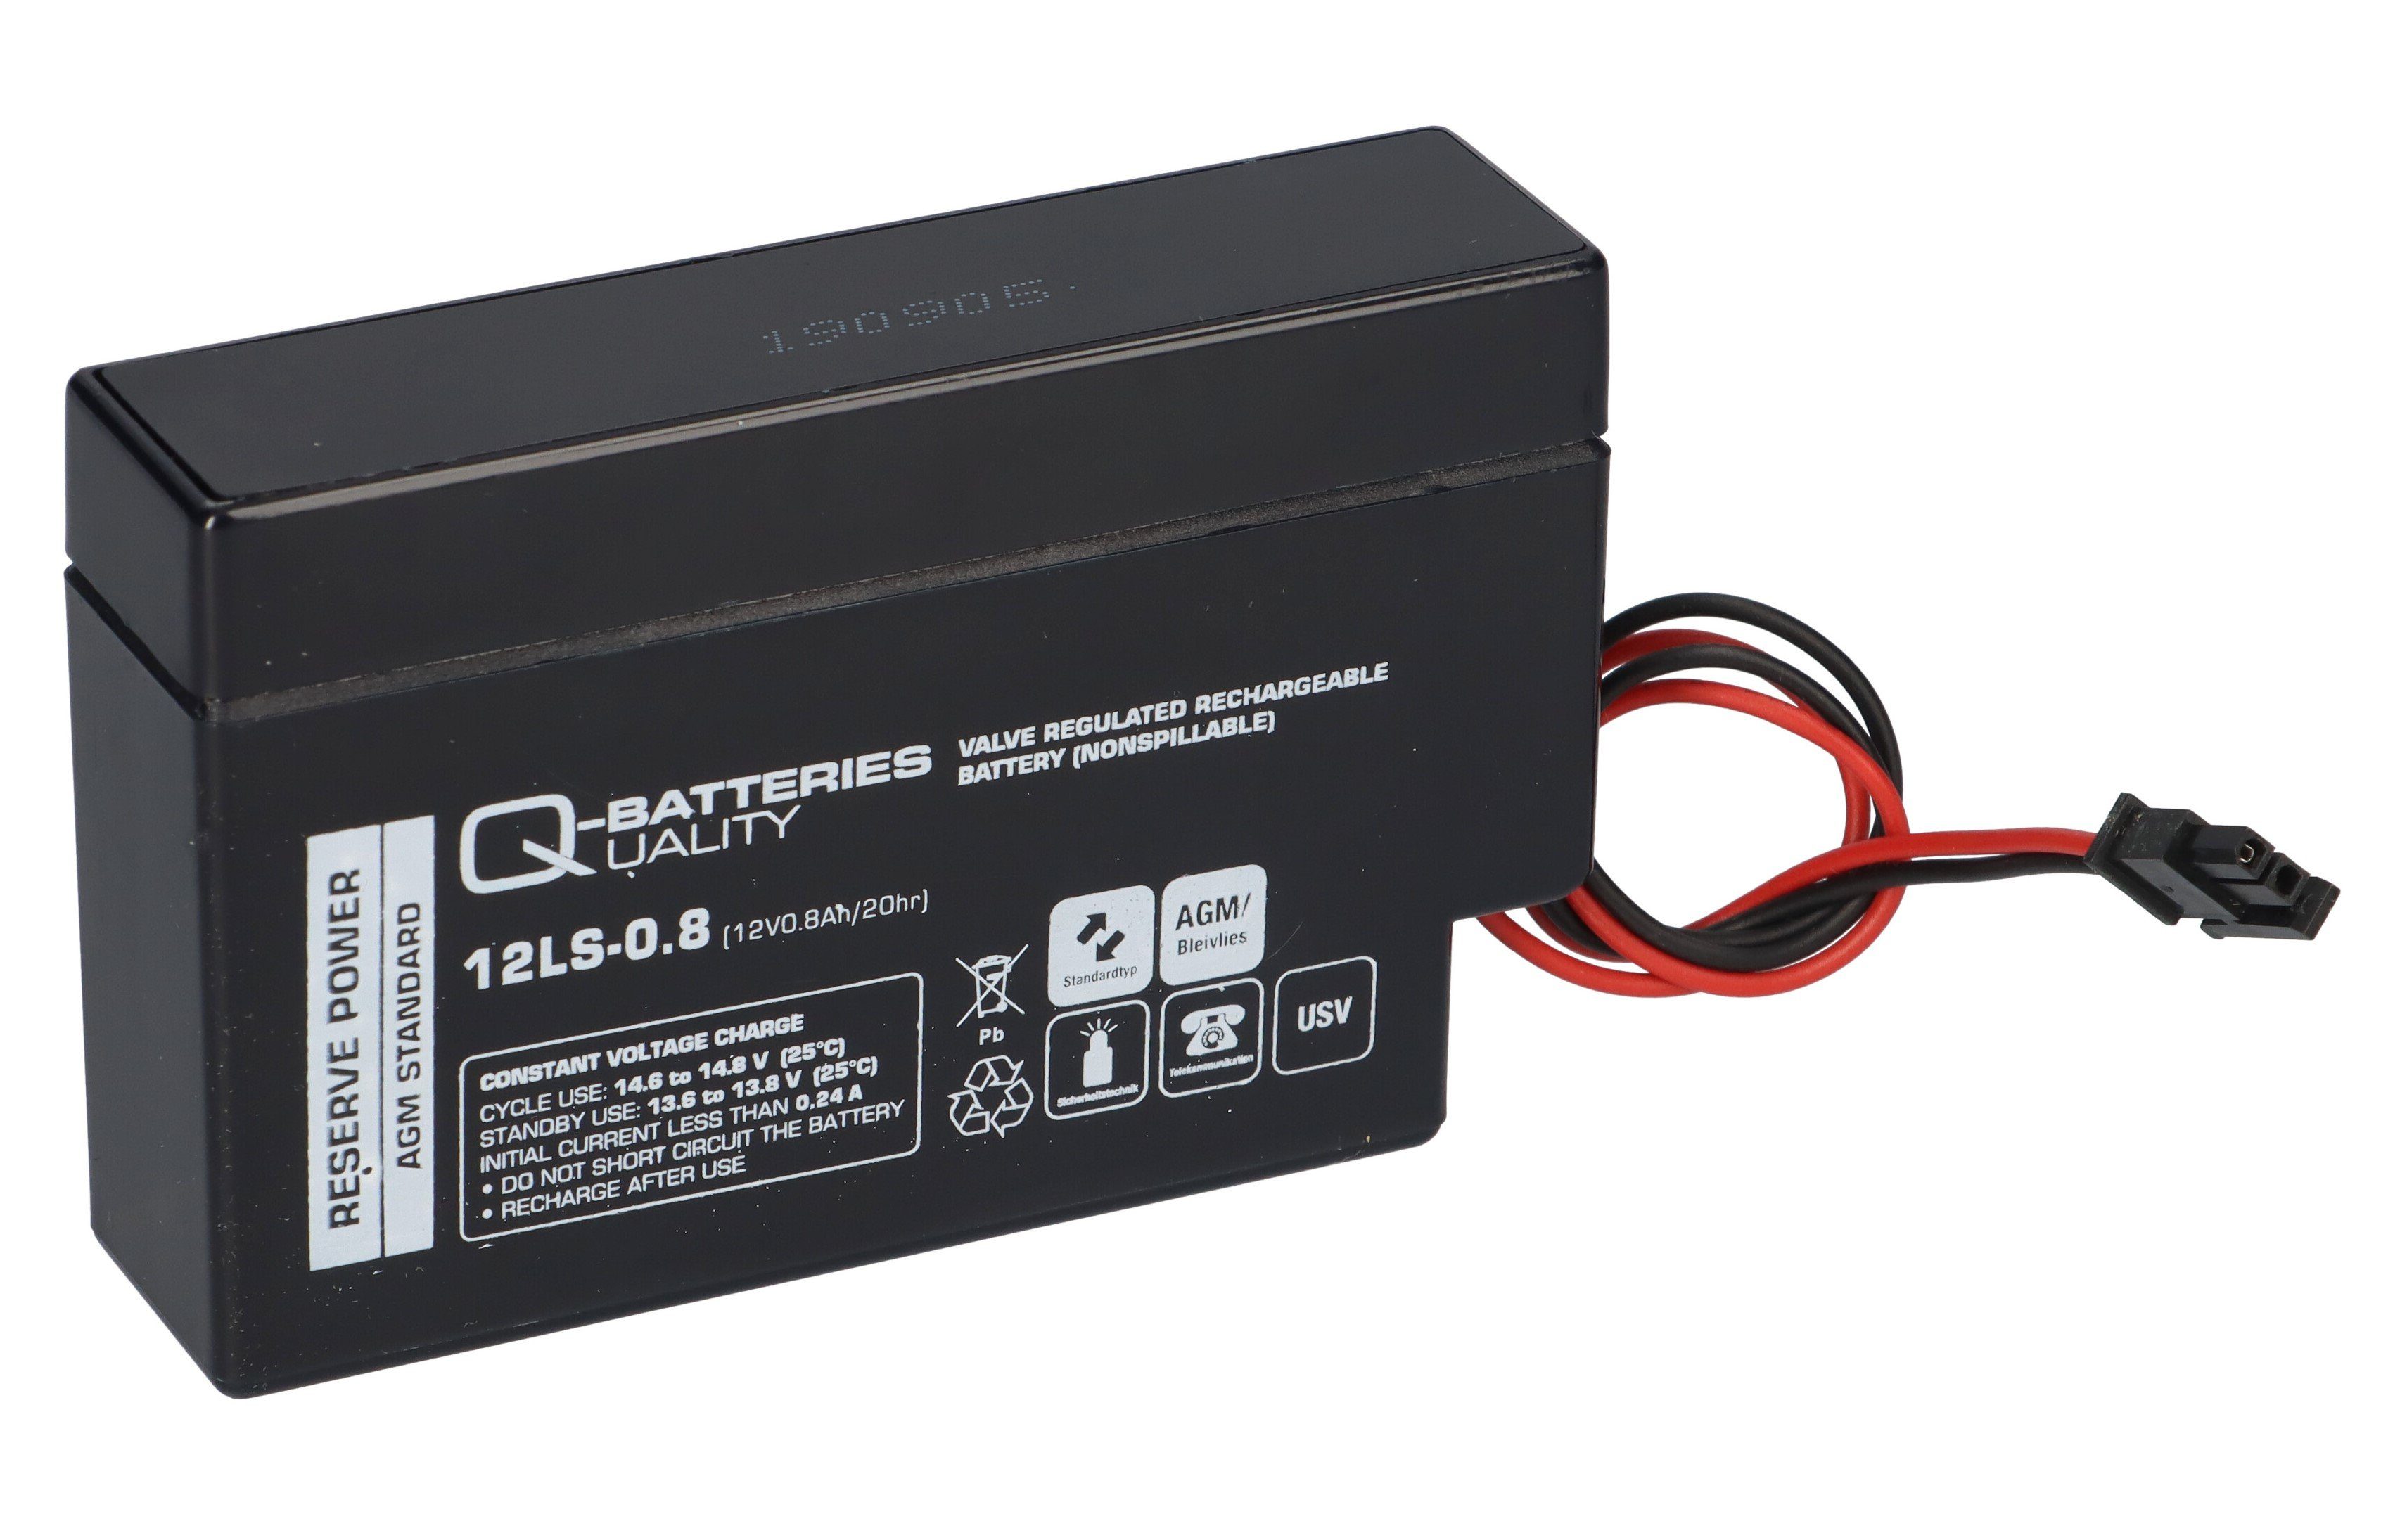 Q-Batteries Q-Batteries 12LS-0.8 12V 0,8Ah AGM Blei-Vlies Akku Heim & Haus Bleiakkus